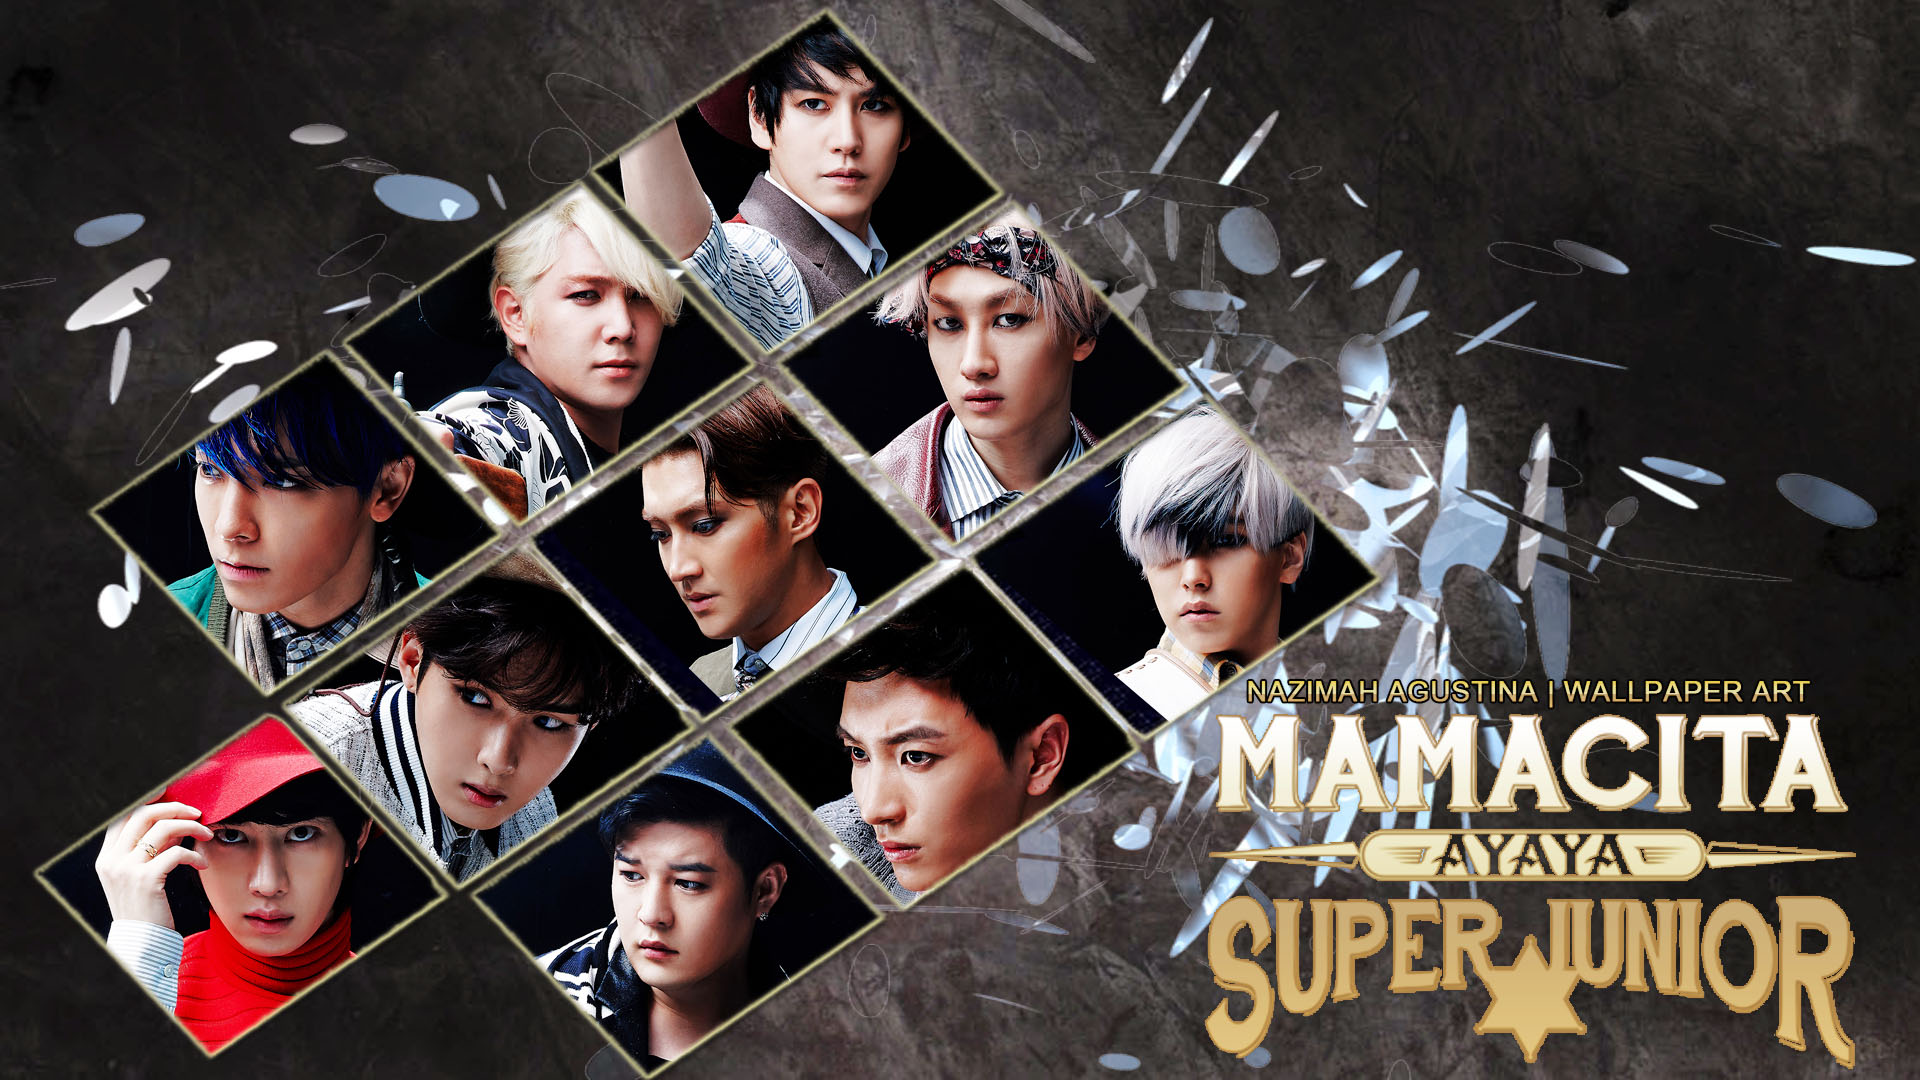 super-junior-mamacita-comeback-7jib-wallpaper-by-nazimah.jpg